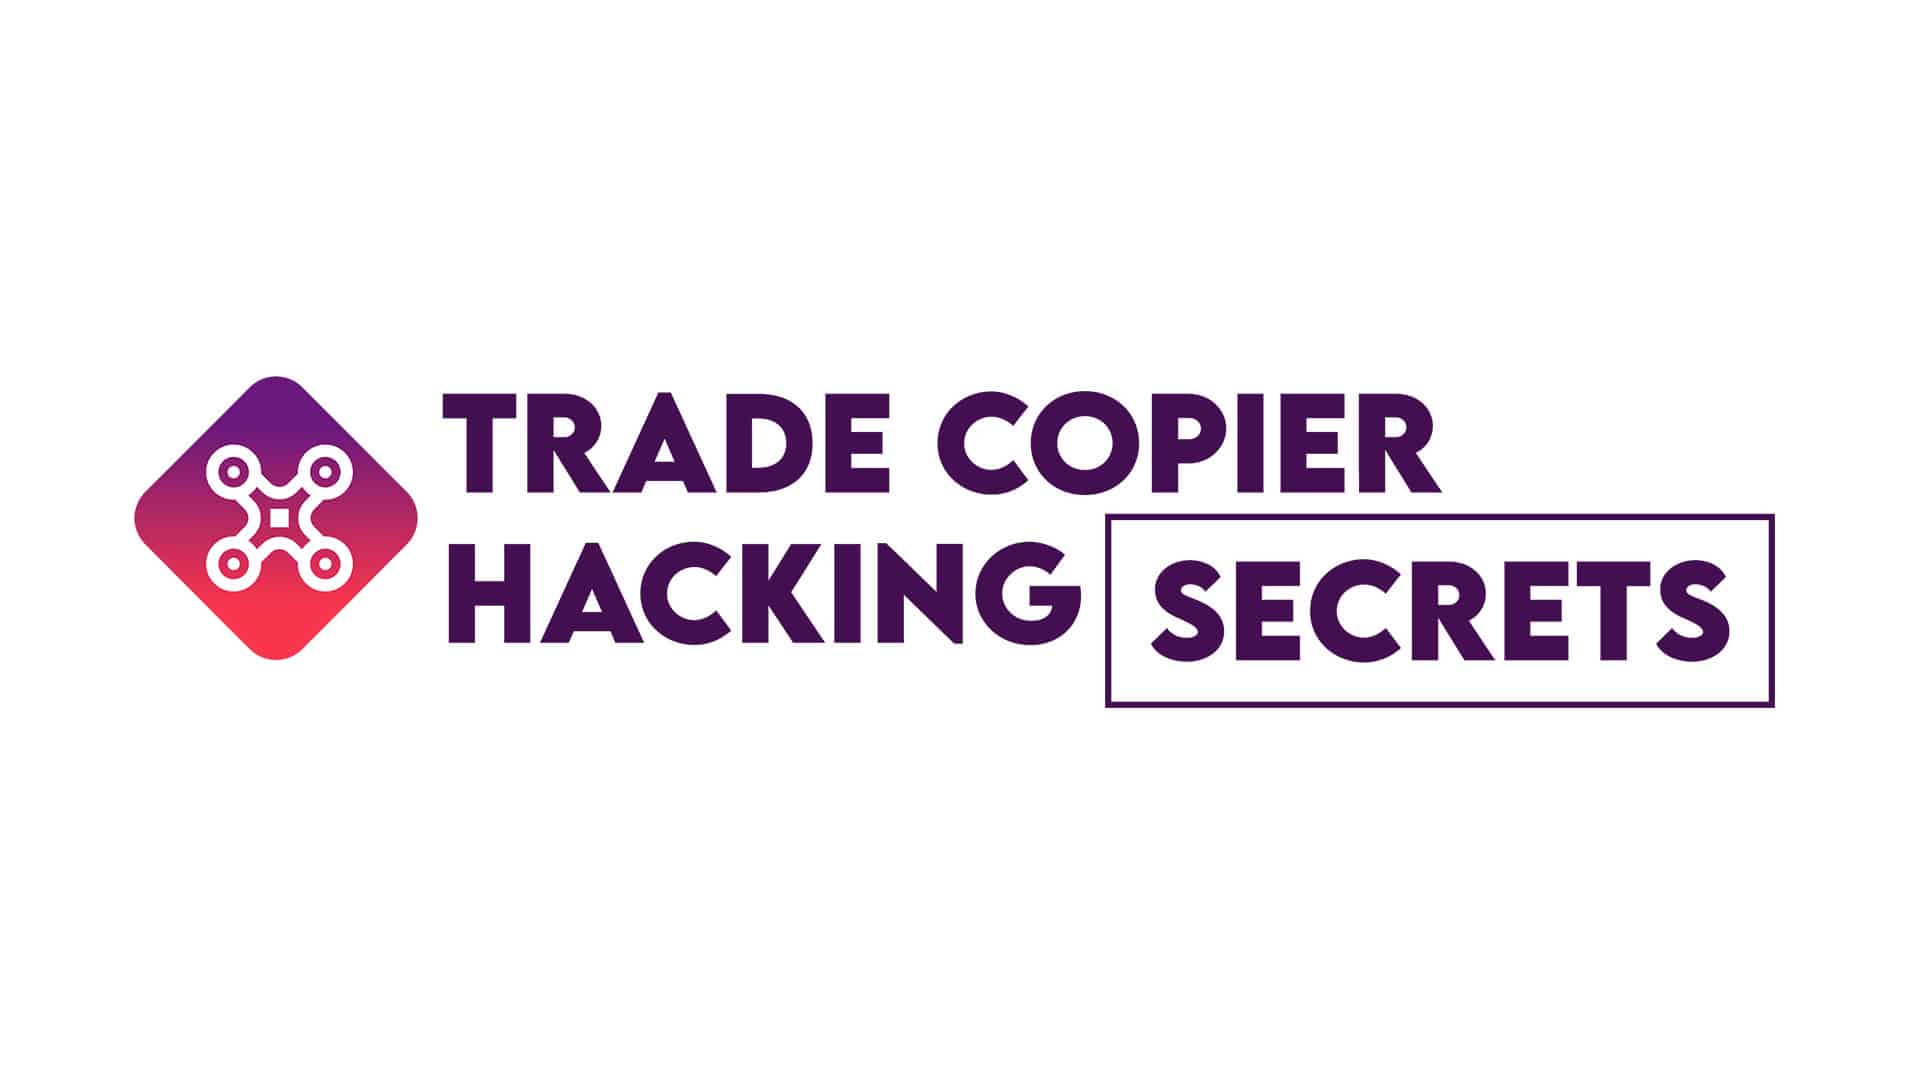 trade-copier-hacking-secrets-logo-1920x1080